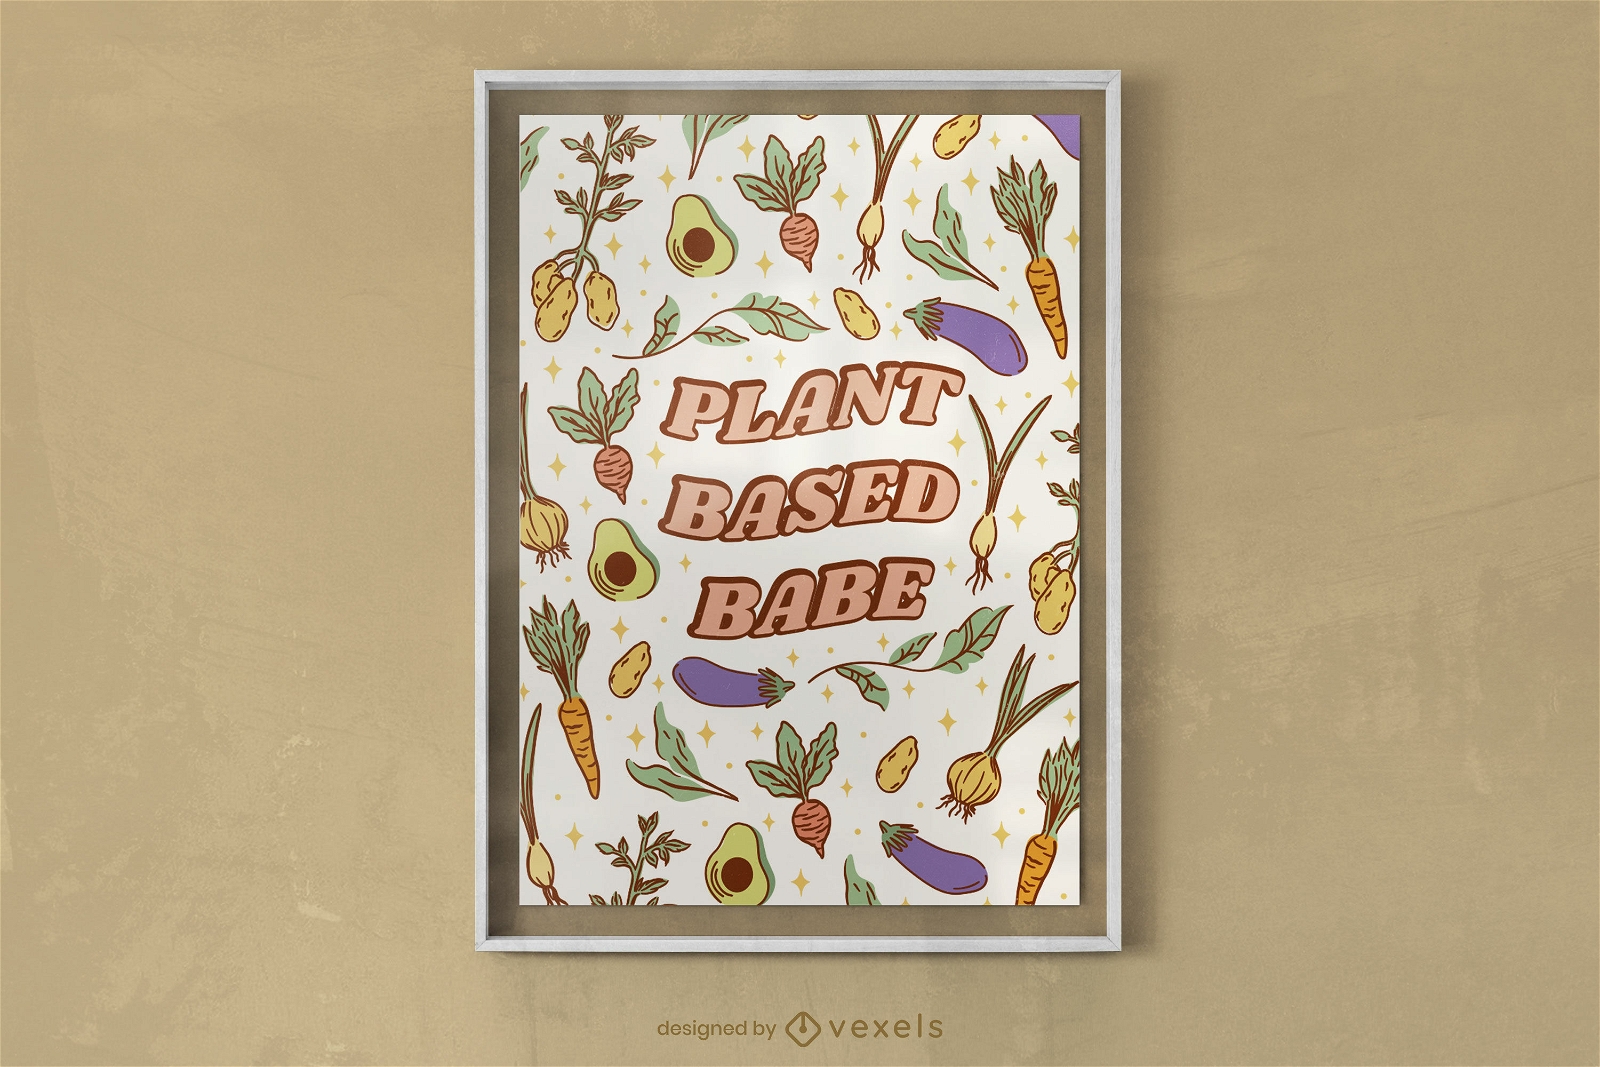 Plant based vegan poster design